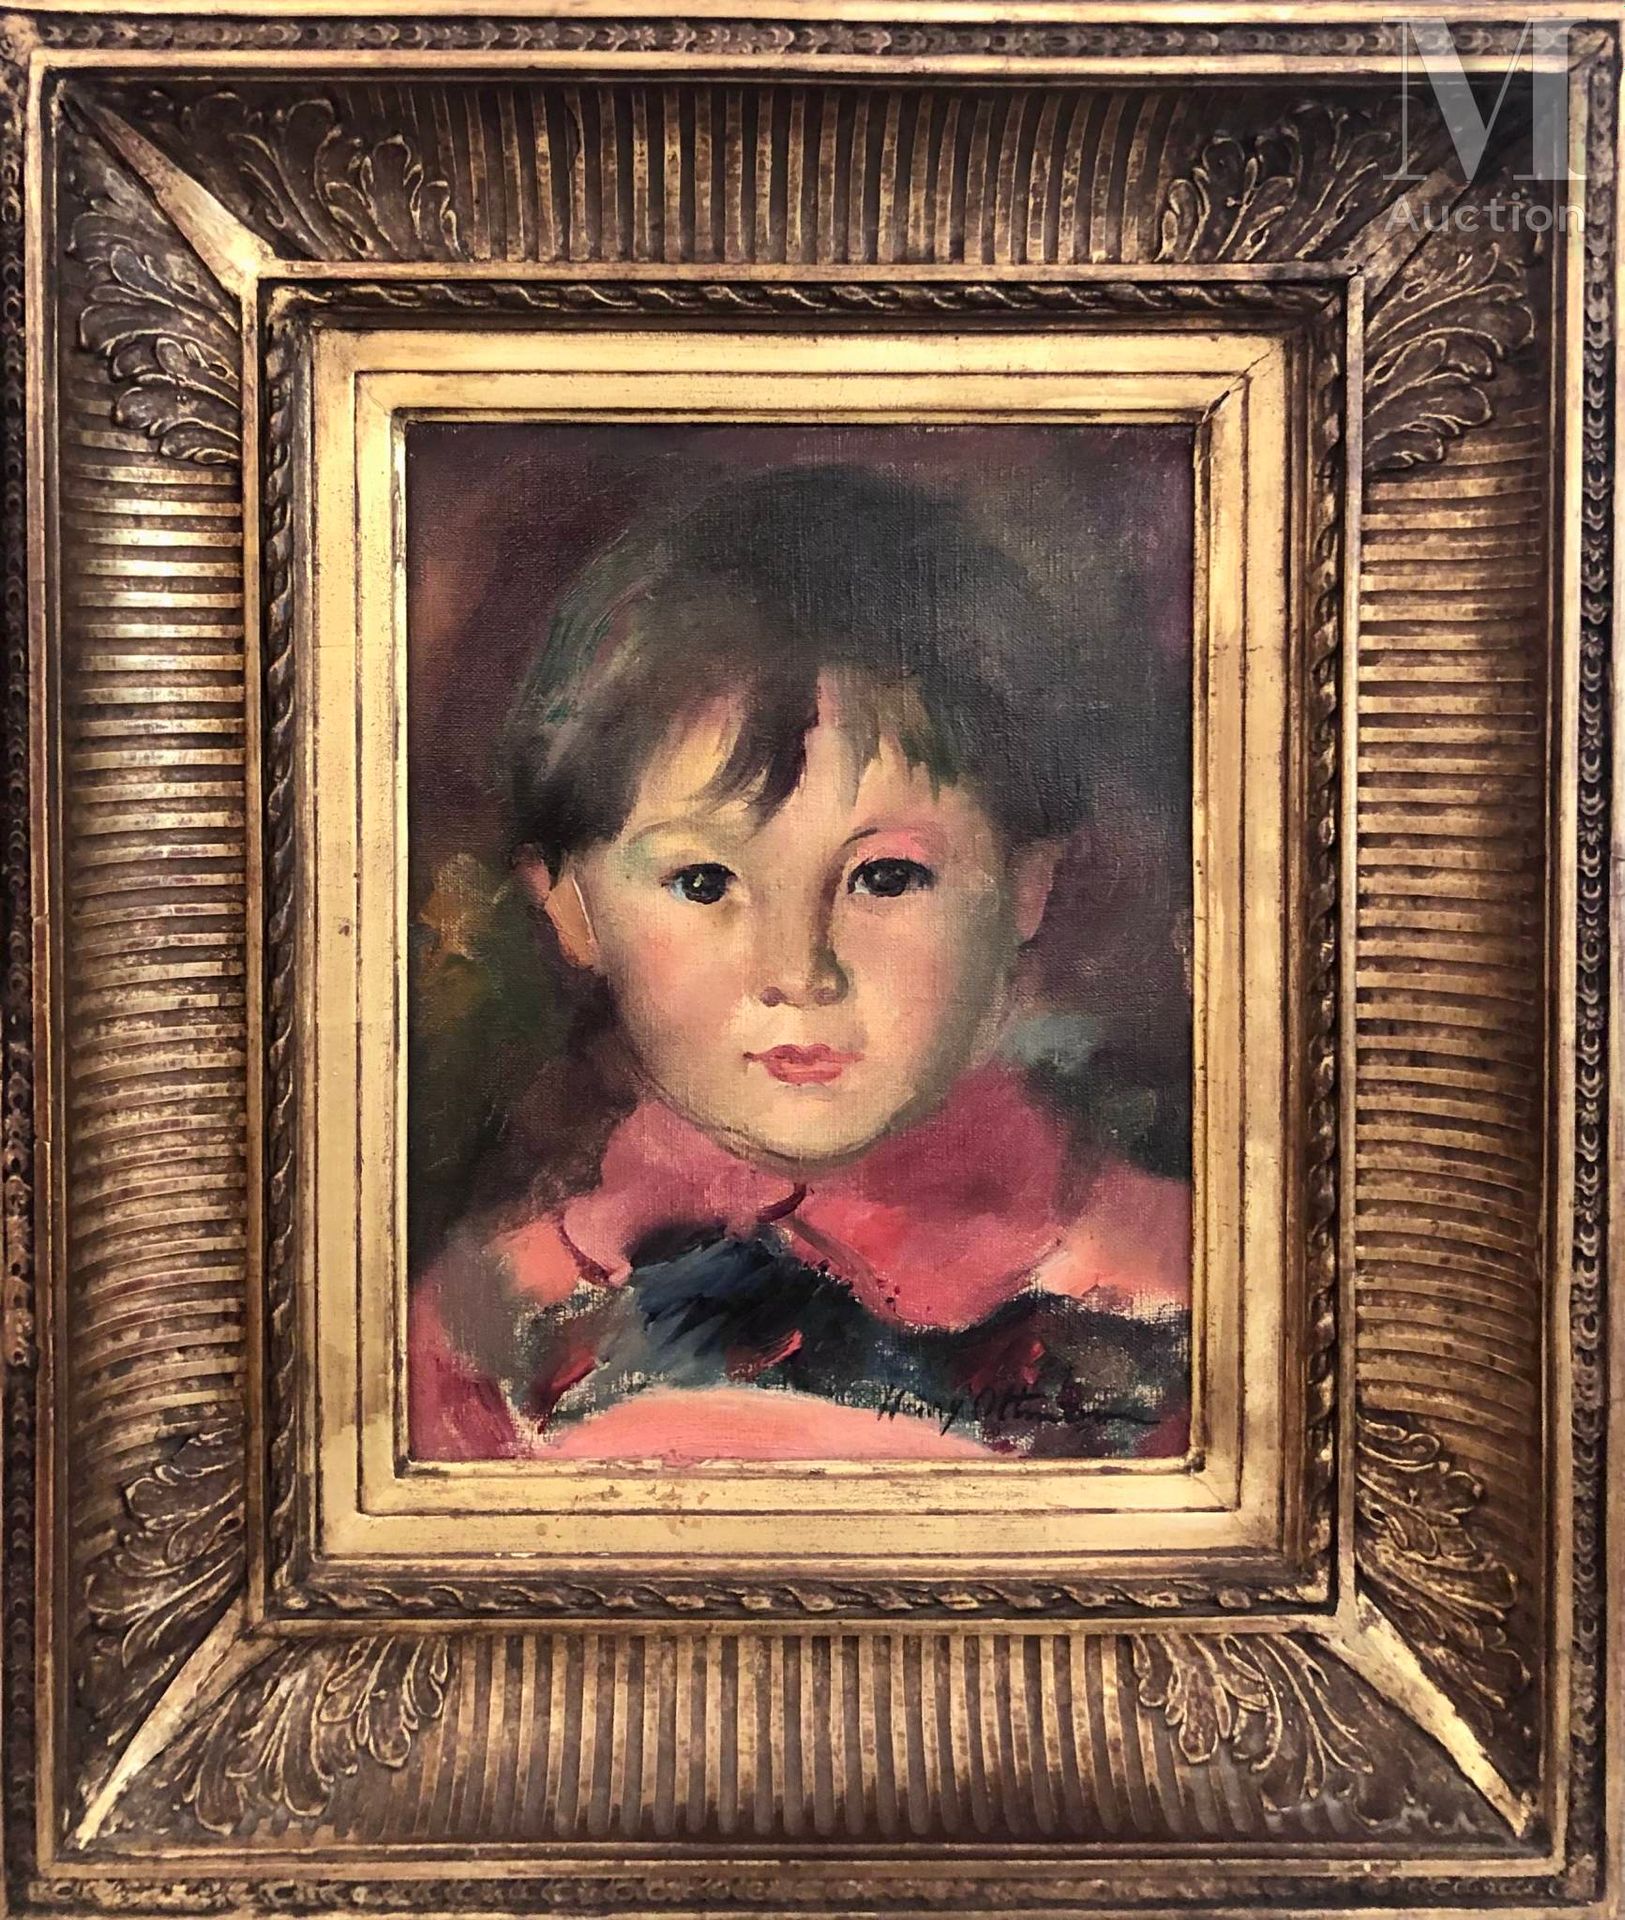 HENRY OTTMAN (1877-1927) 一个小男孩的画像



布面油画

24x19厘米

签名右下：亨利-奥特曼